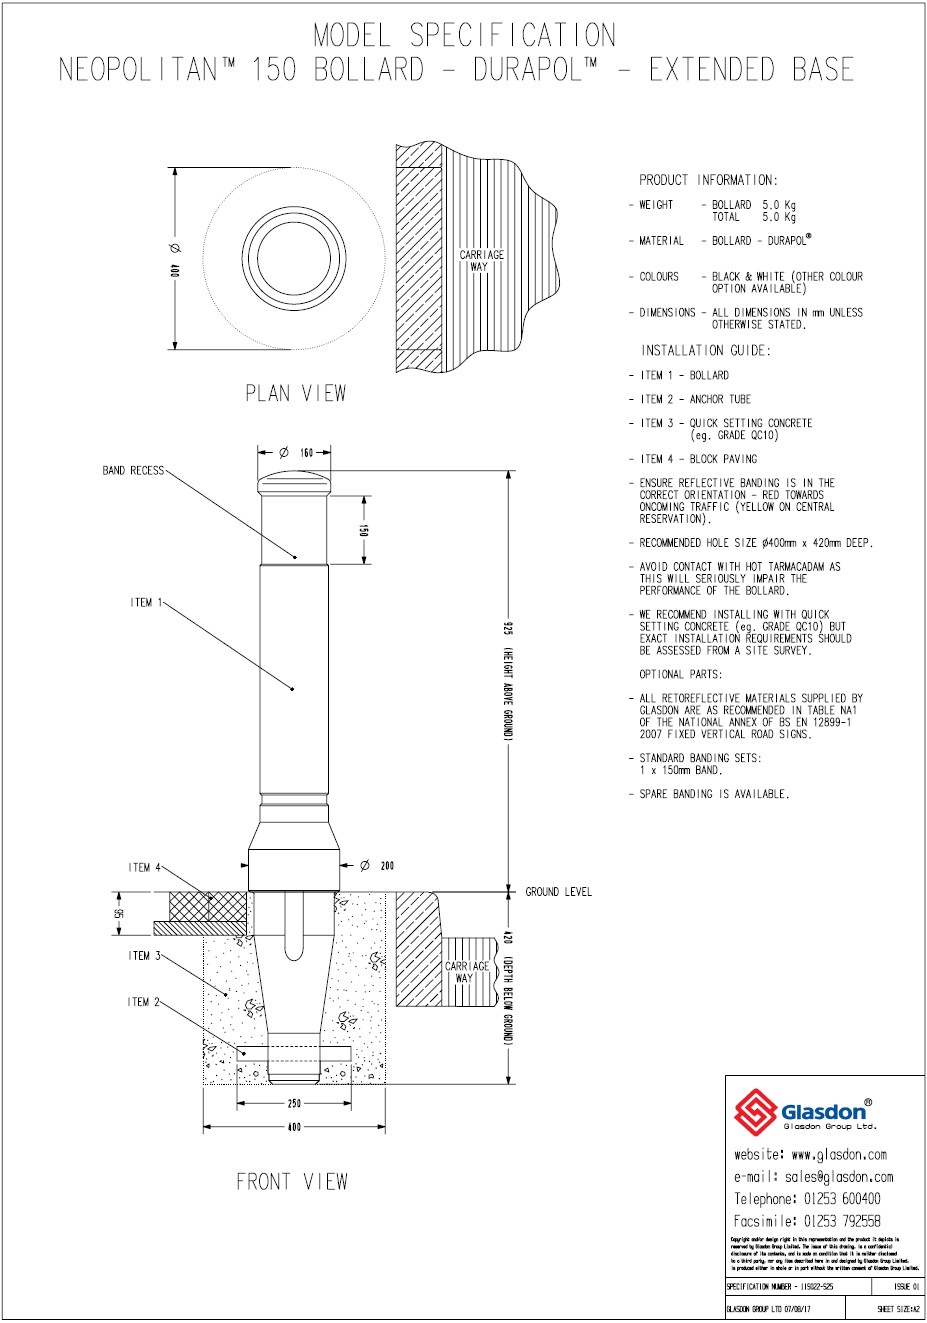 Neopolitan 150 Bollard - Durapol Model - Extended Base (PDF)